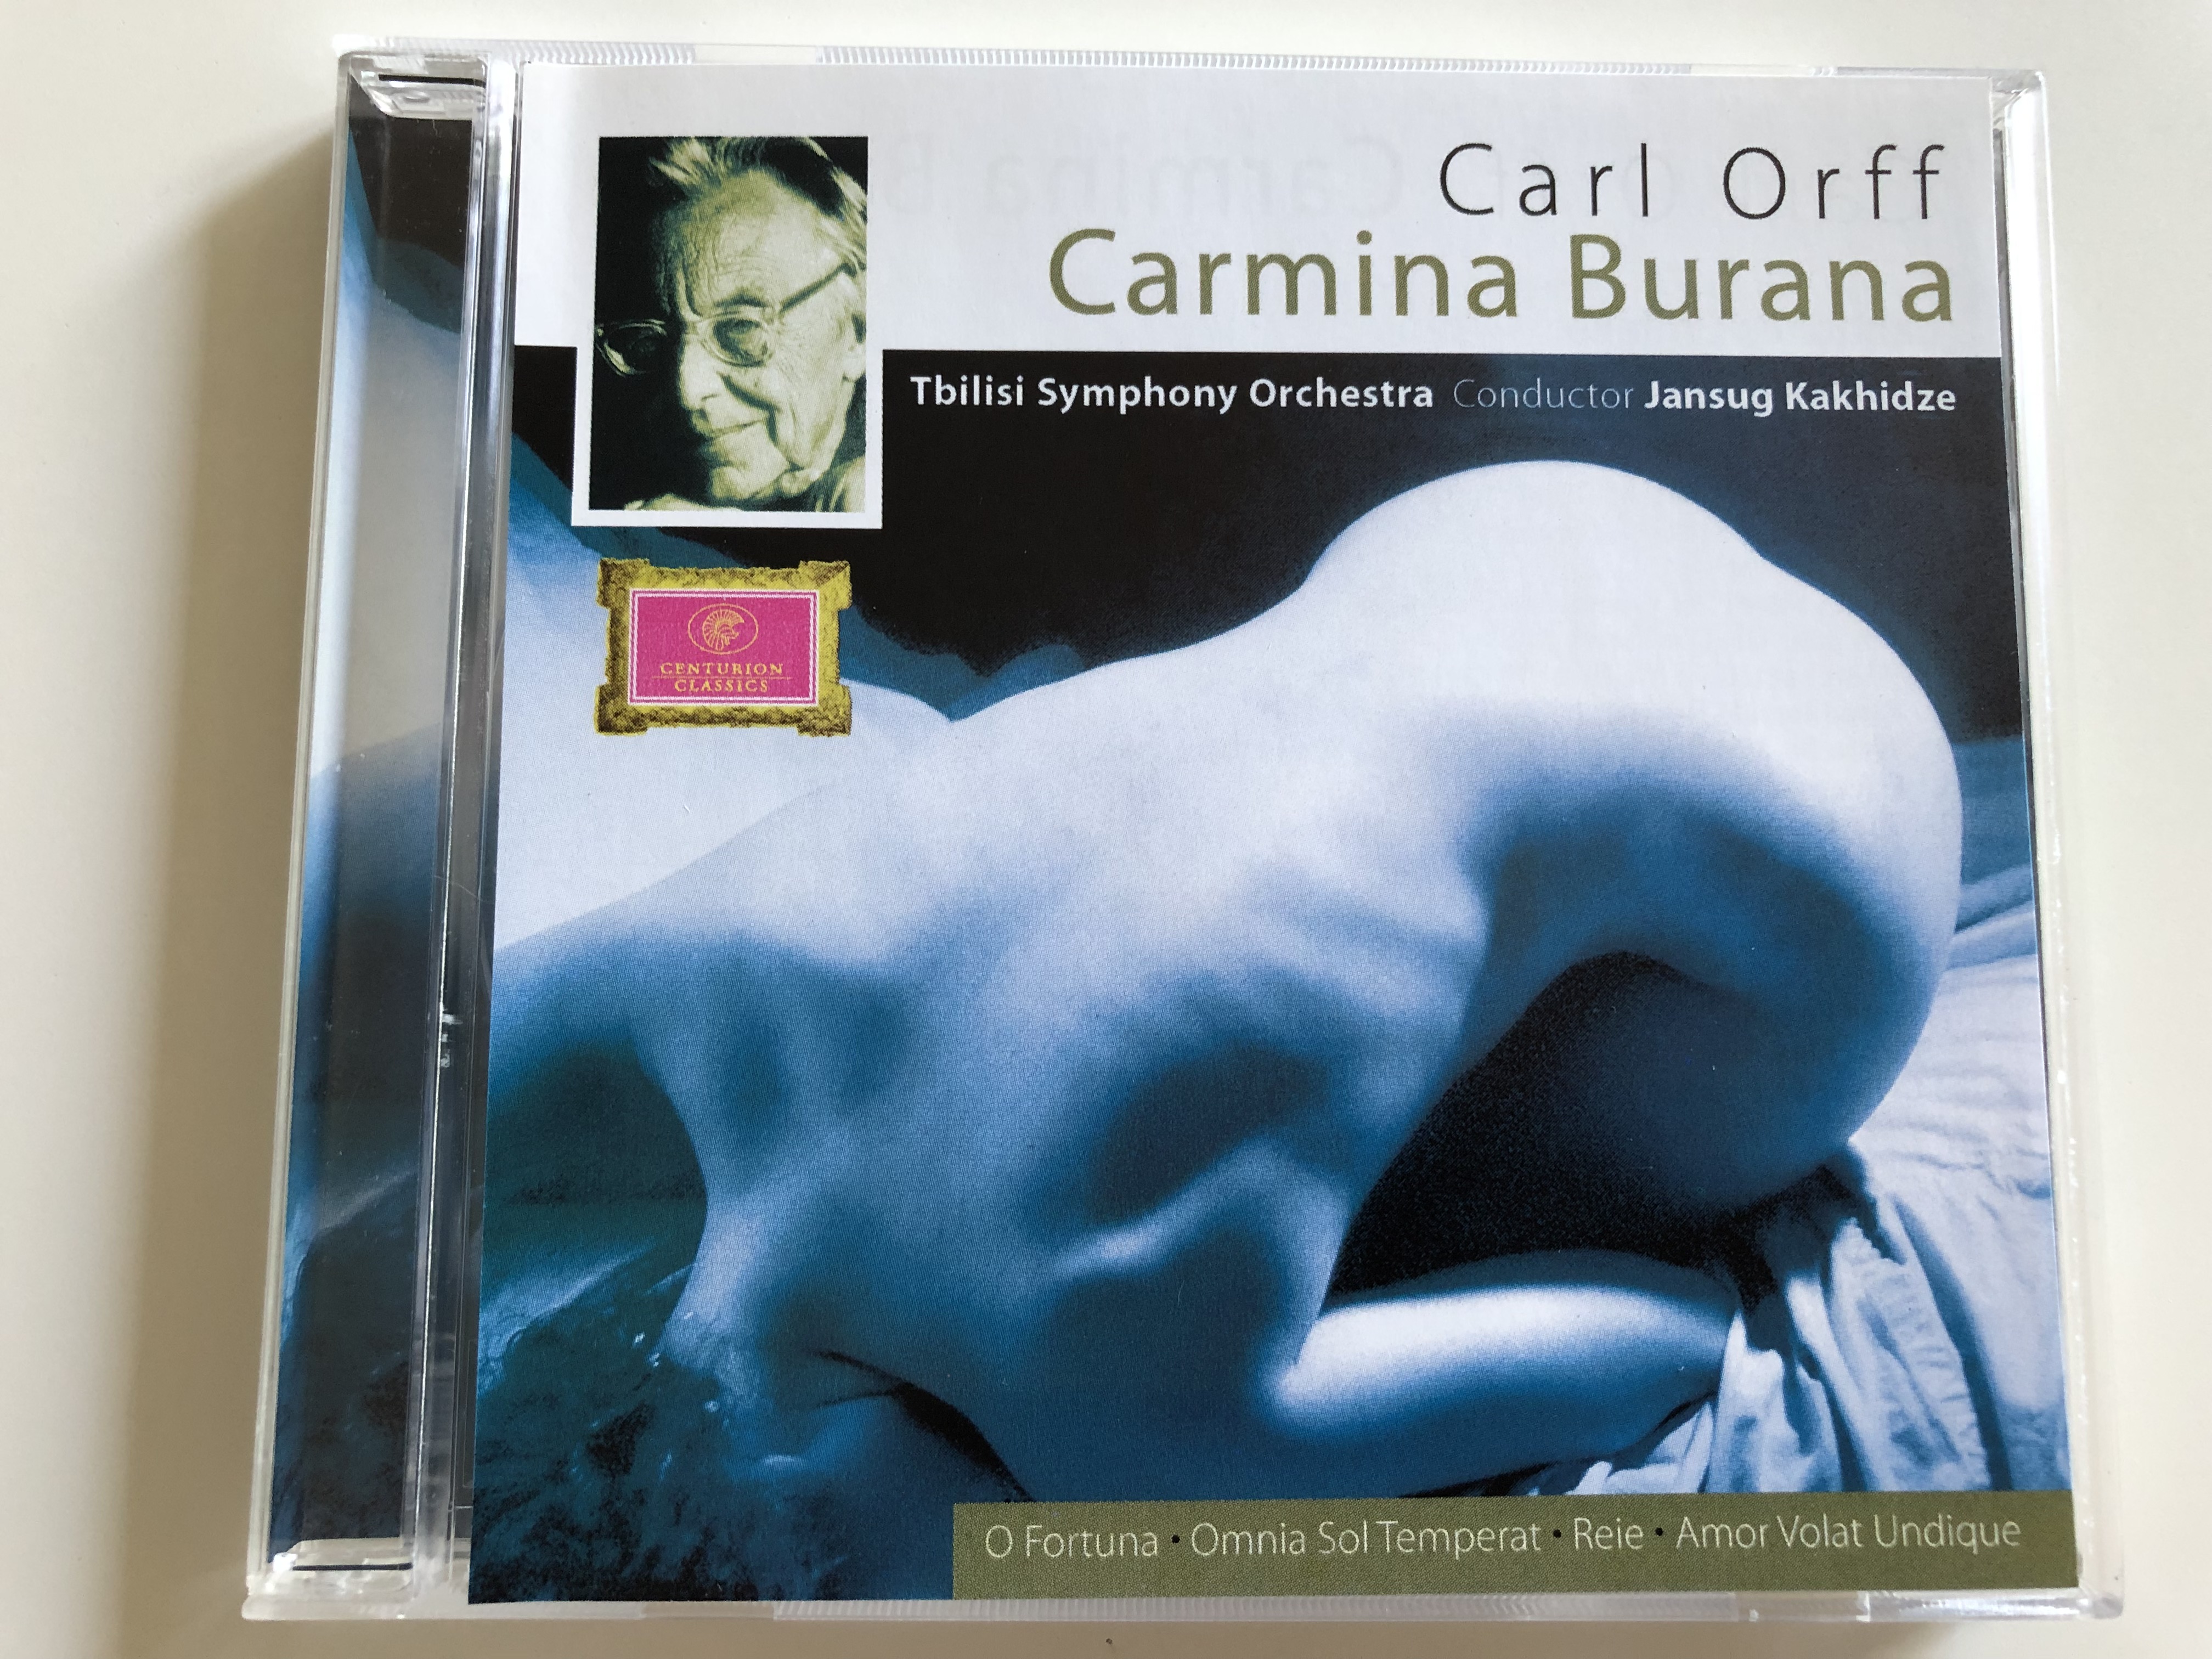 carl-orff-carmina-burana-tbilisi-symphony-orchestra-conductor-jansug-kakhidze-o-fortuna-omnia-sol-temperat-reie-amor-volat-undique-audio-cd-2005-1-.jpg